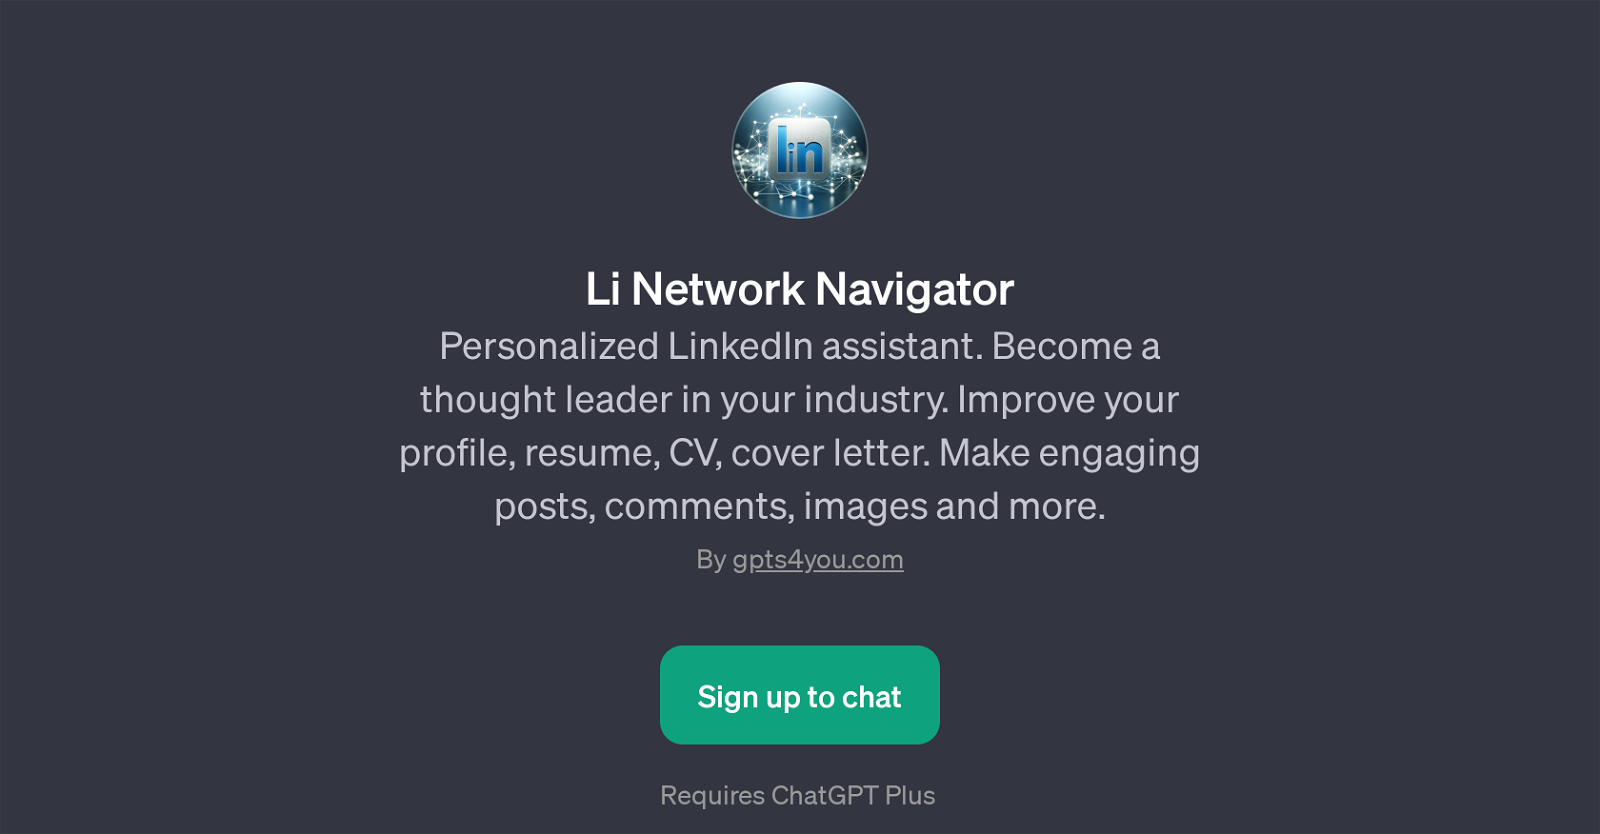 Li Network Navigator website